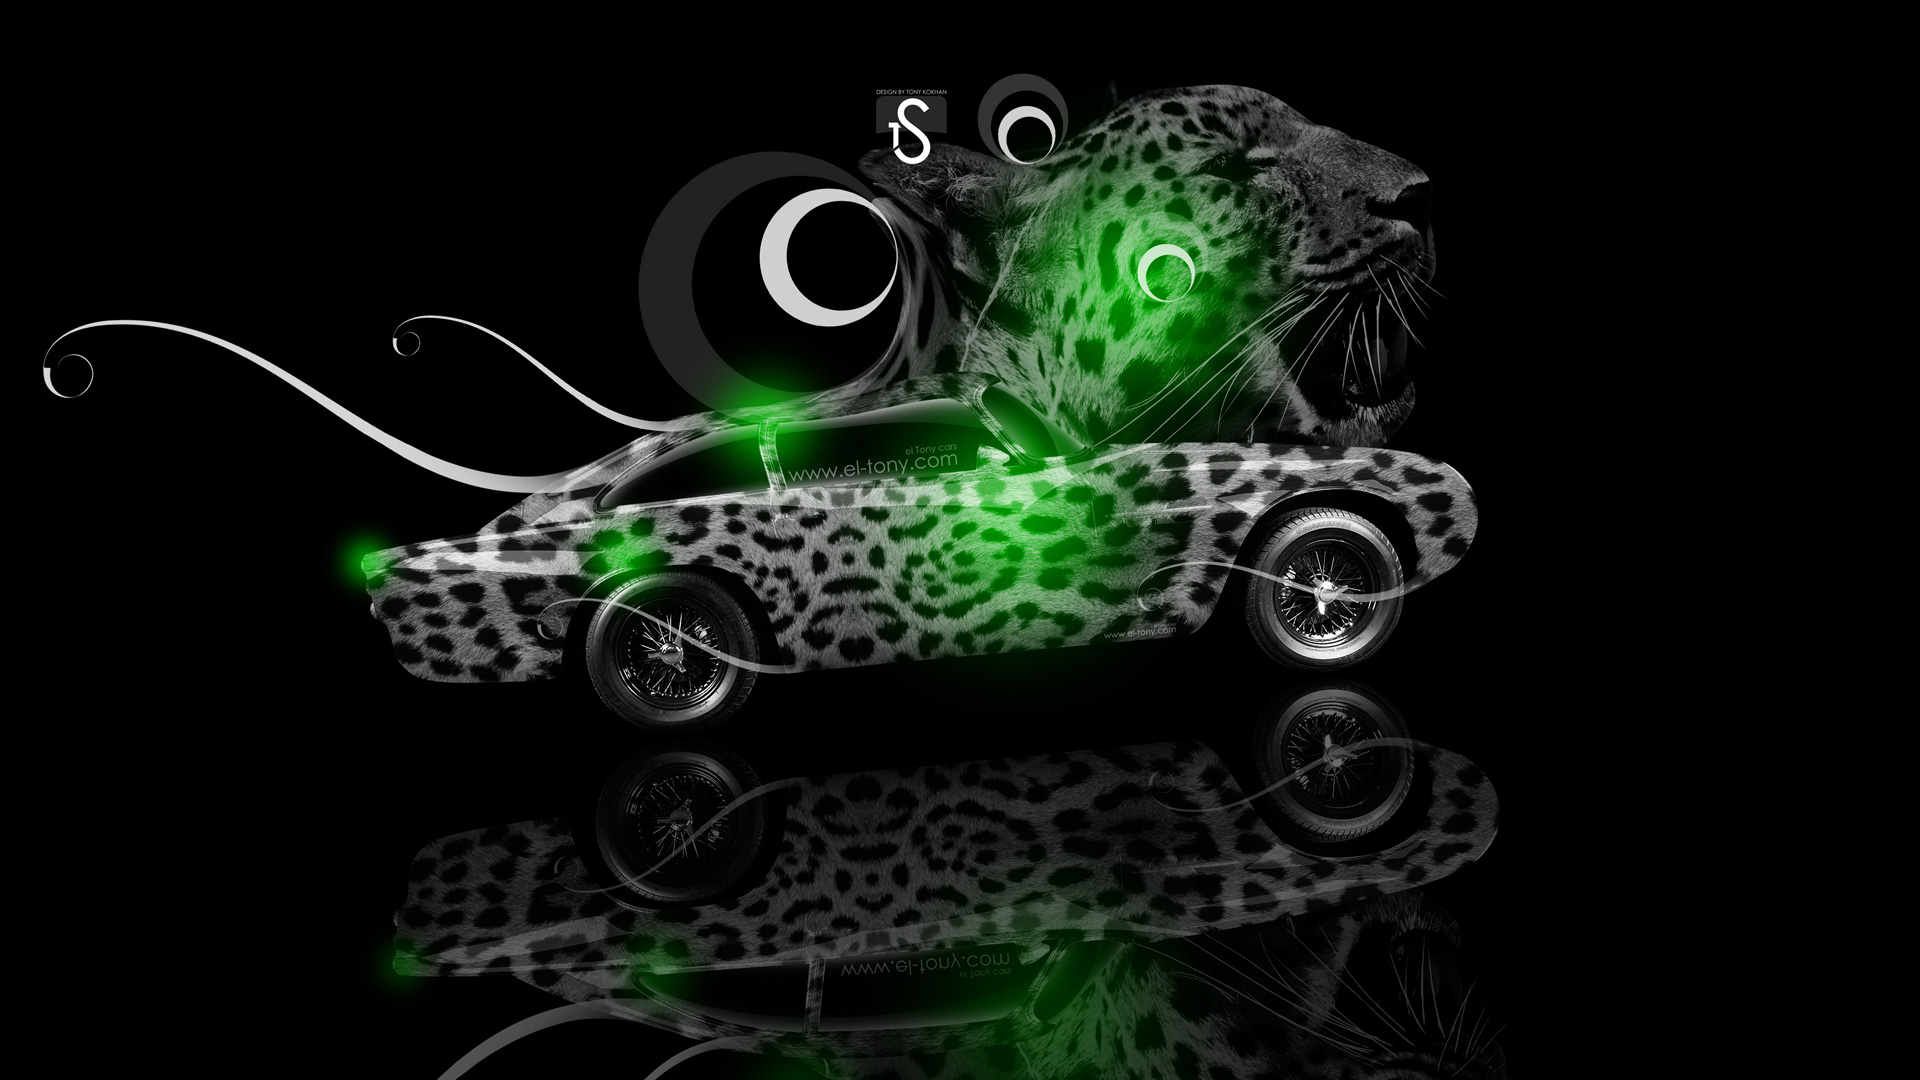 Aston Martin Db4 Fantasy Leopard Car Green Neon